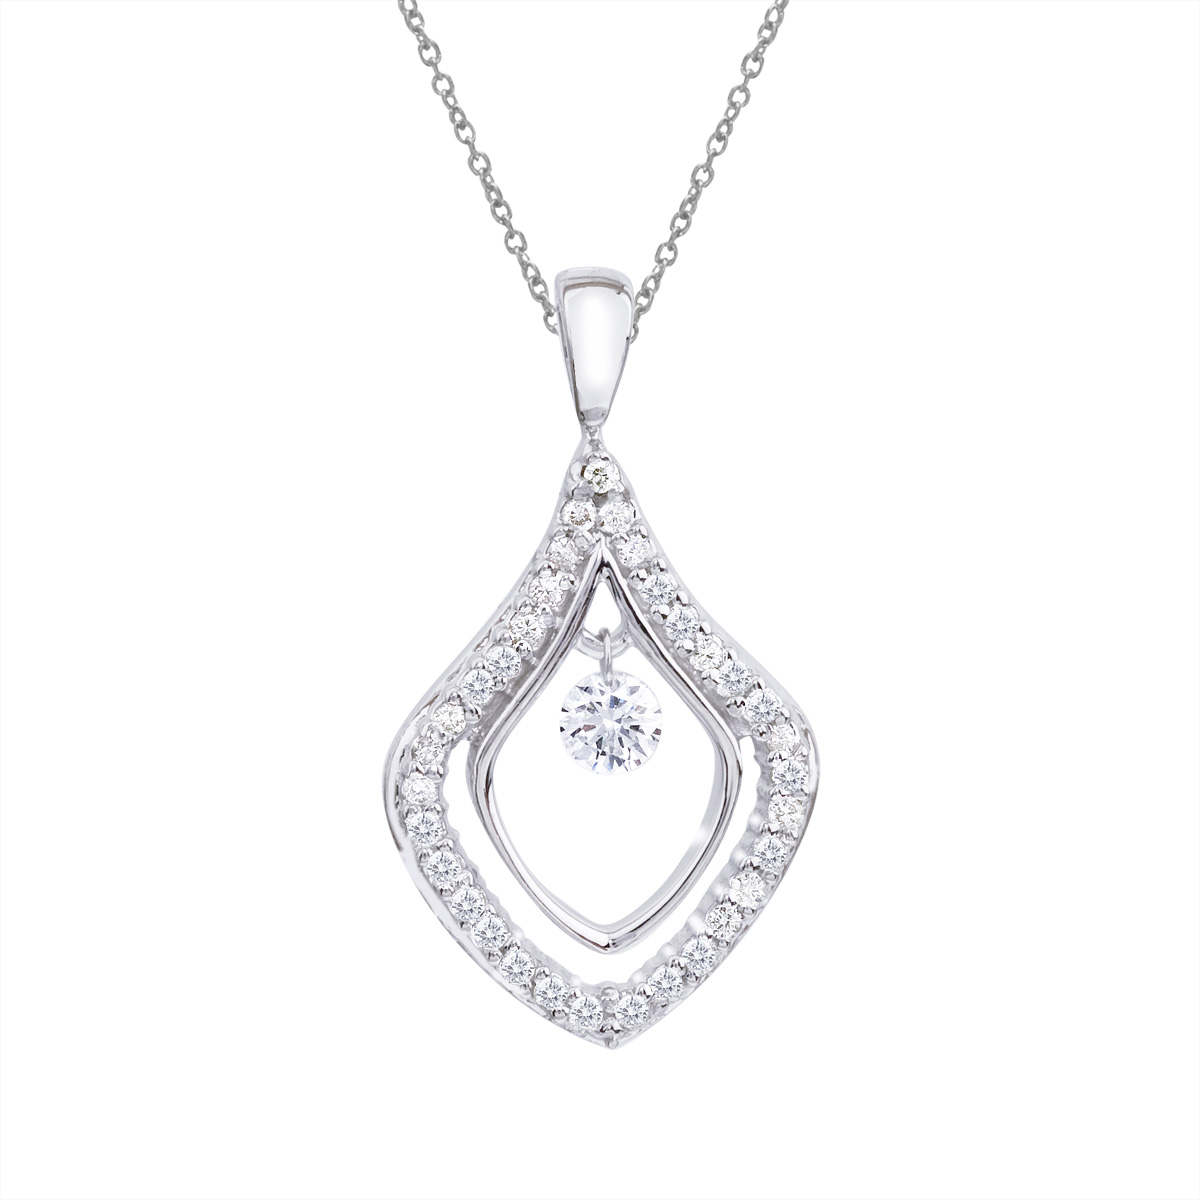 14k gold Dashinng Diamonds pendant with 0.29 total ct diamonds. The center dangling diamond dance...